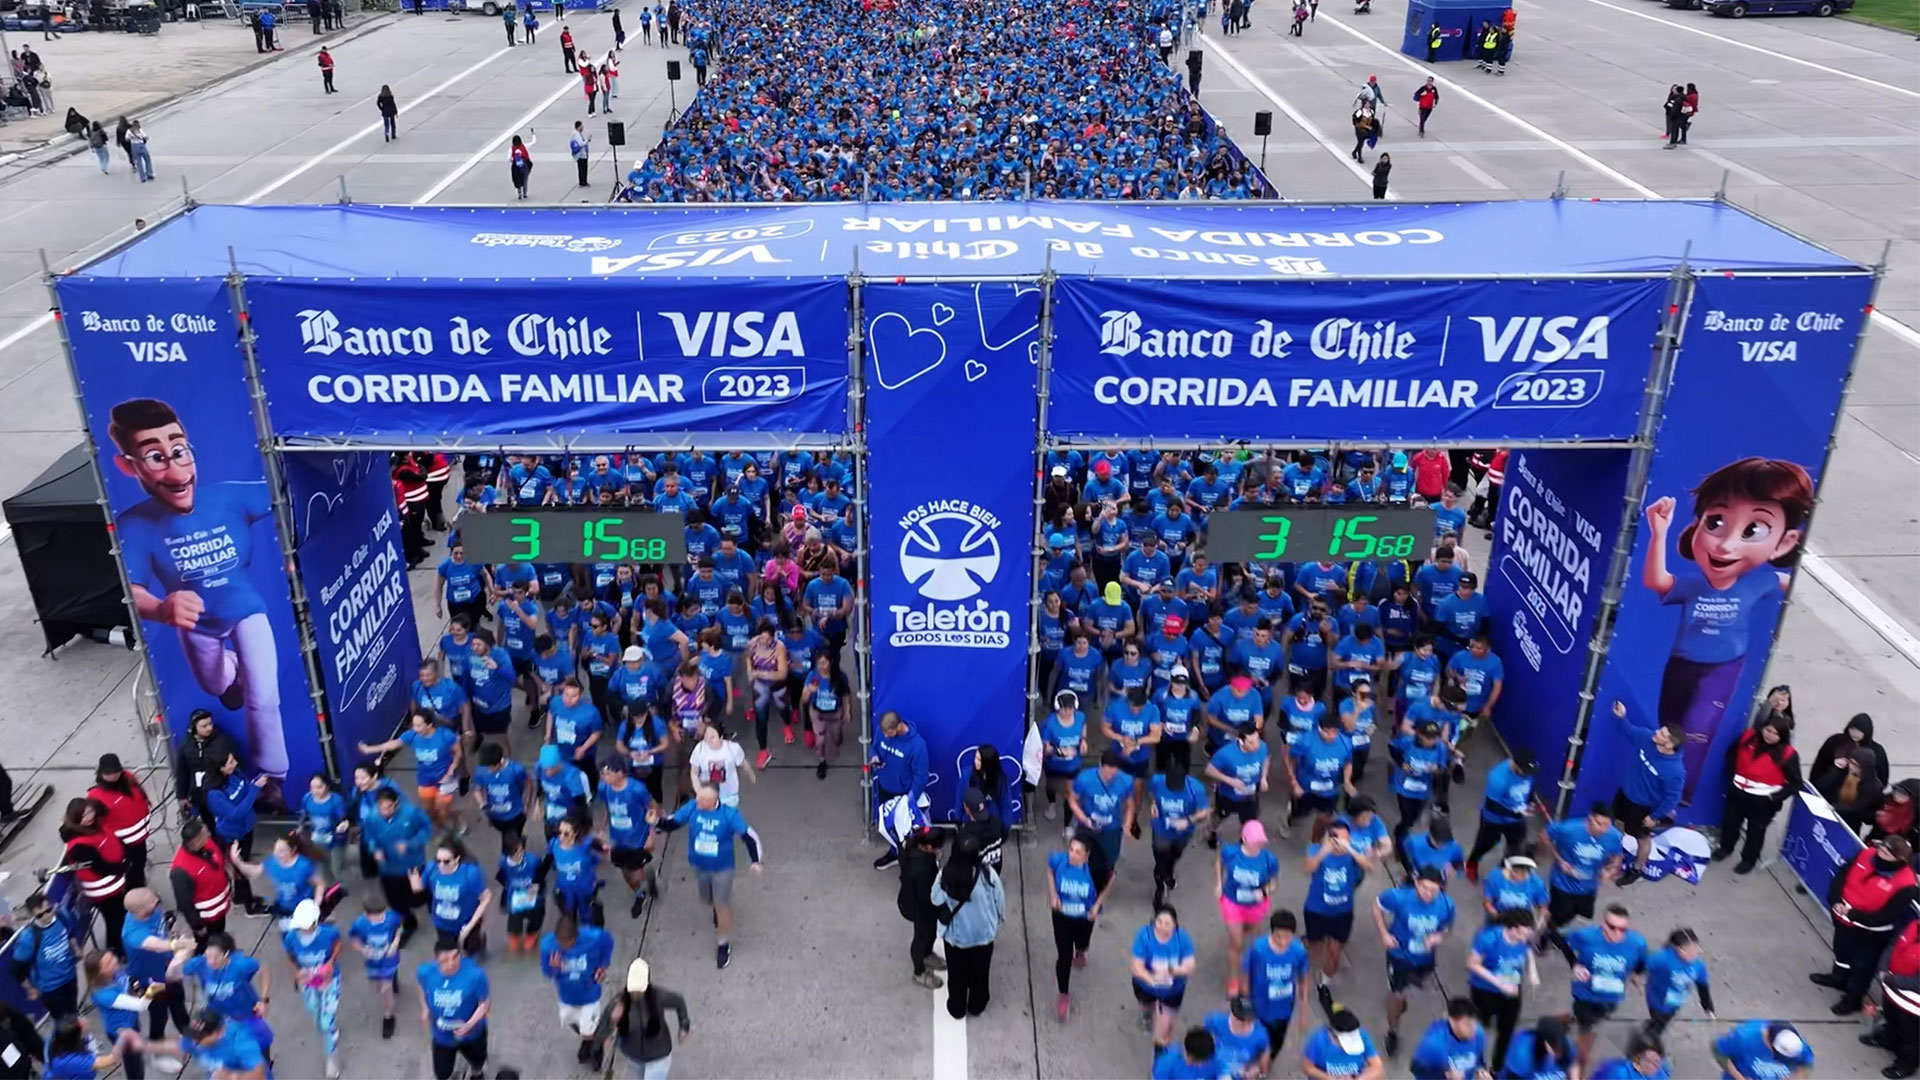 Con masiva convocatoria se realizó la gran corrida familiar Banco de Chile-Visa en Teletón 2023